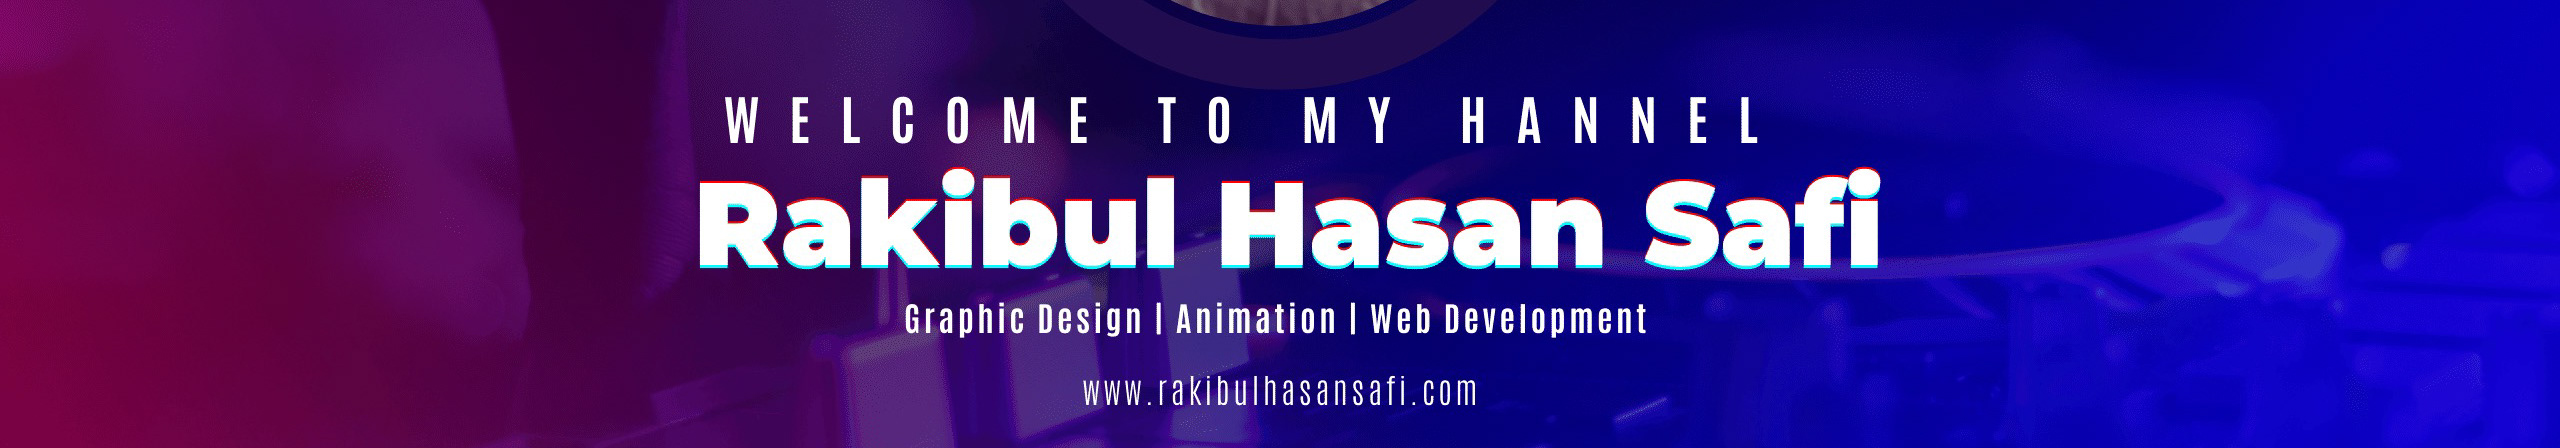 Rakibul Hasan Safi's profile banner